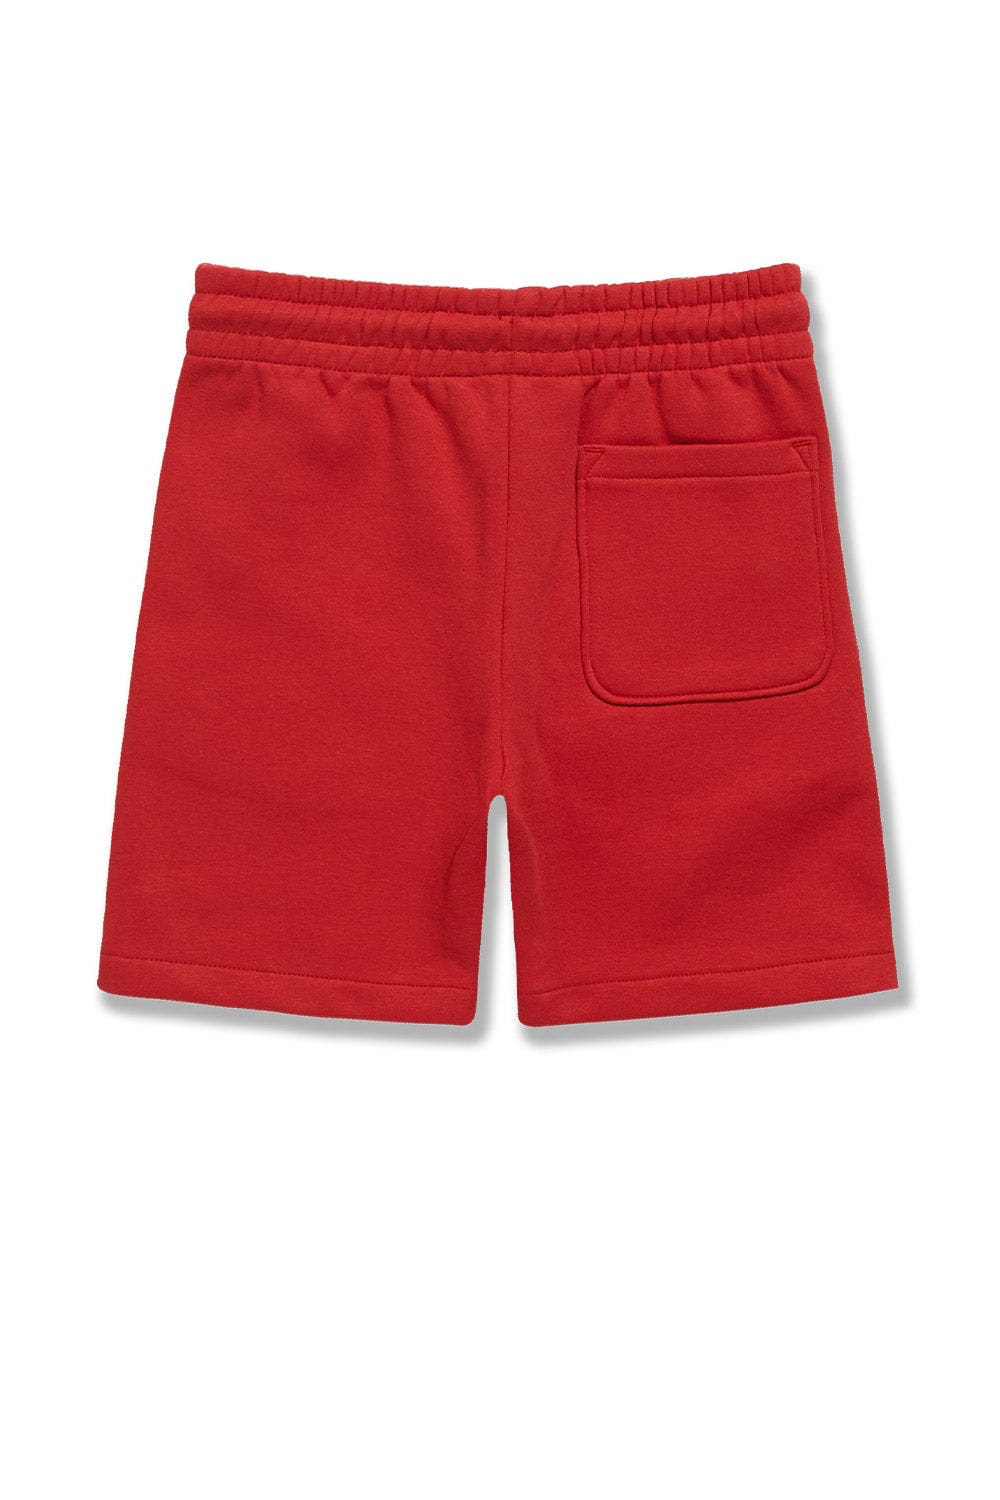 JC Kids Kids Paradise Tonal Shorts (Red)